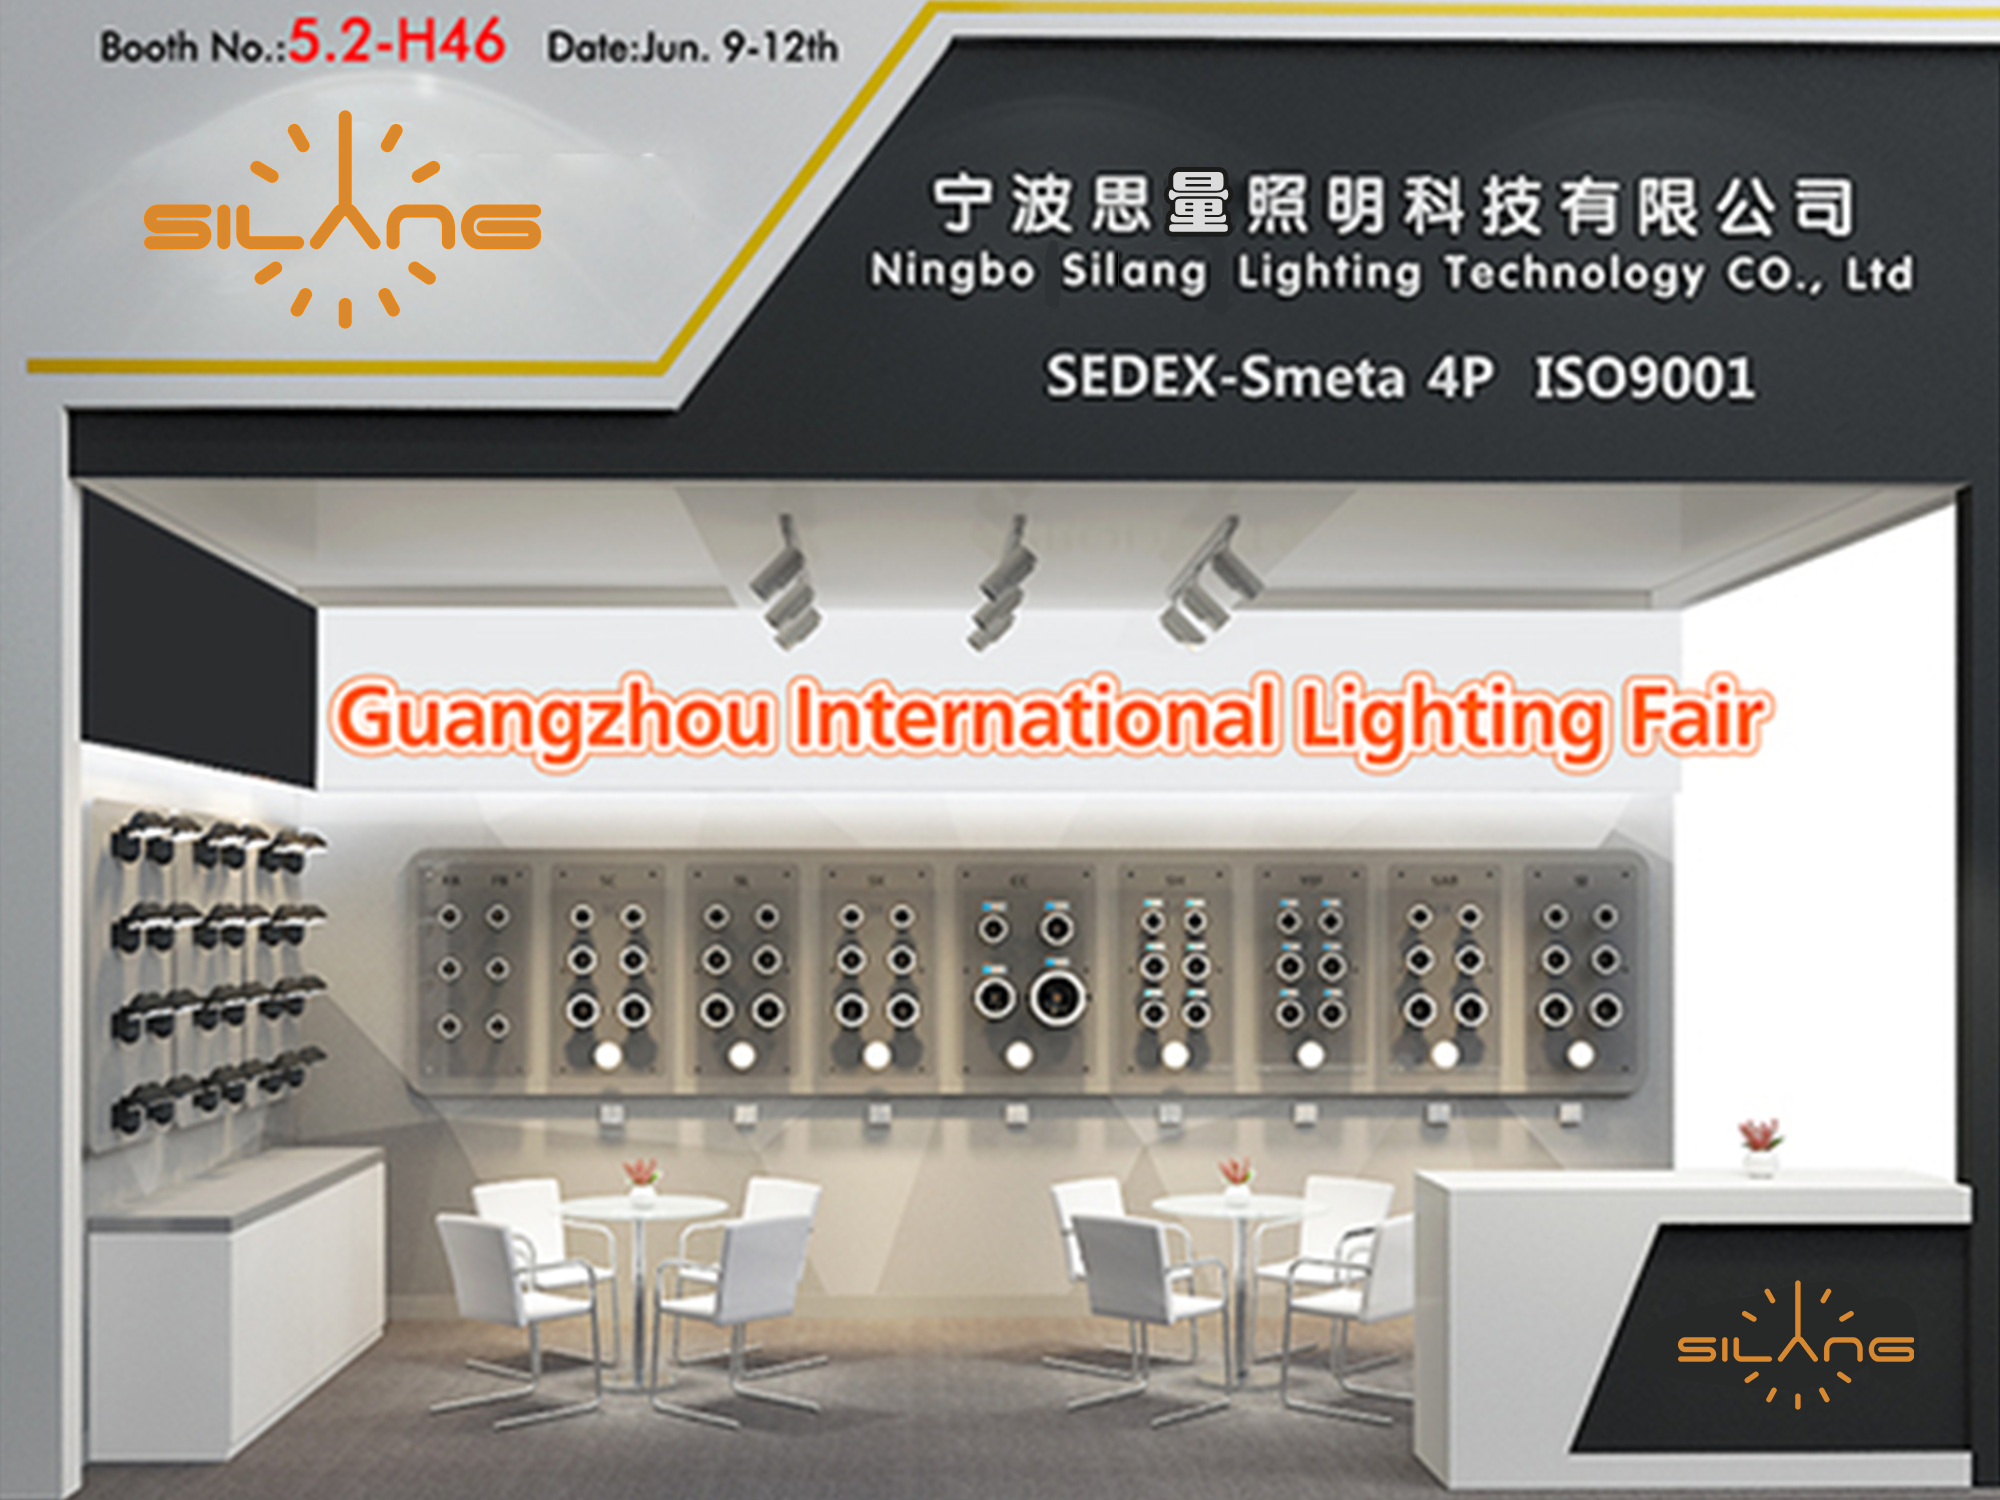 Guangzhou International Lighting Fair